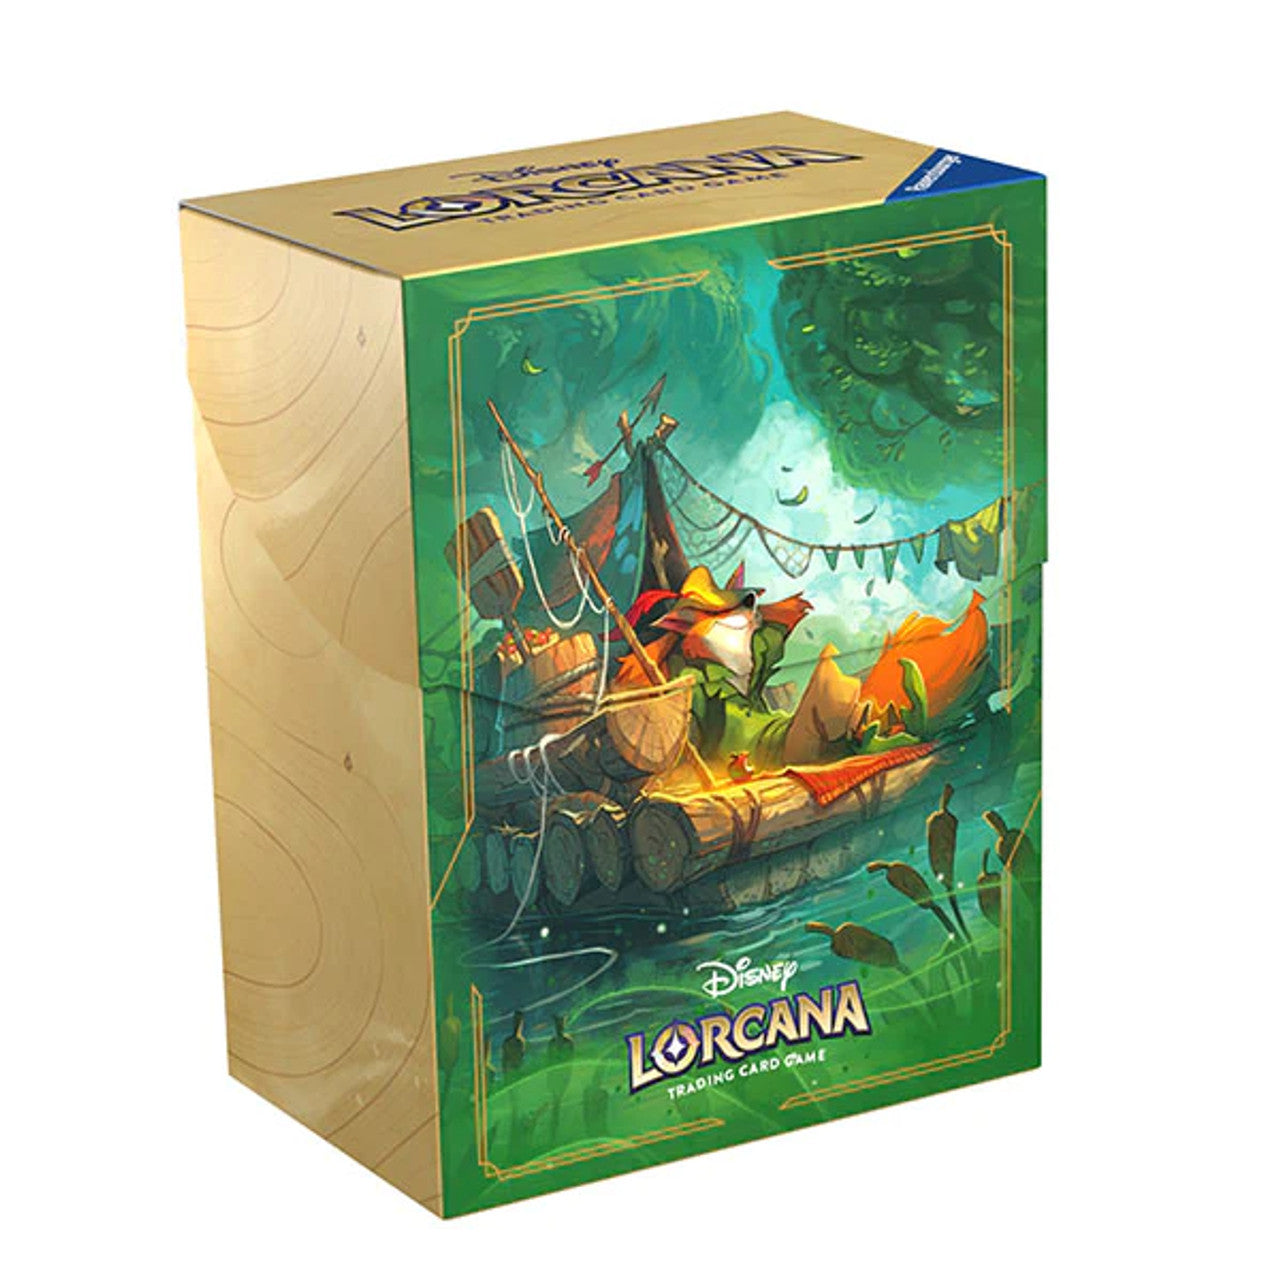 Disney Lorcana: Deck Box - Robin Hood